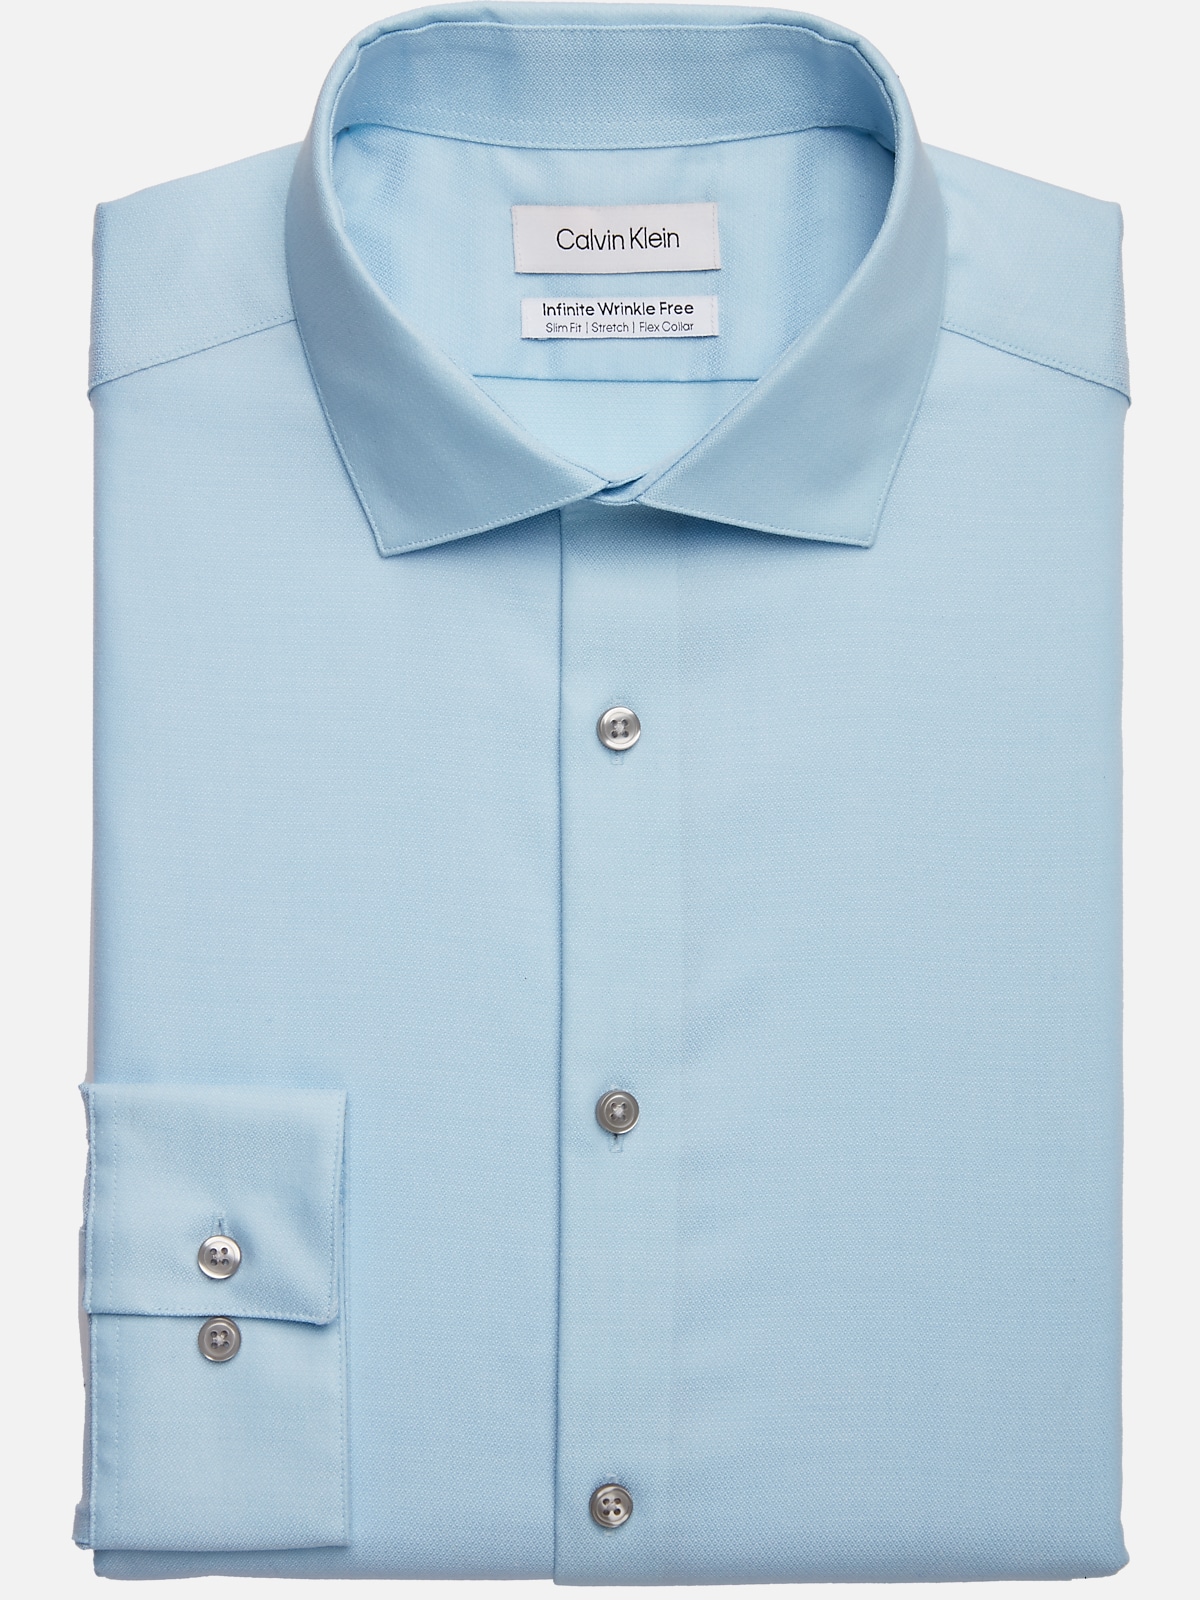 Calvin Klein Infinite Wrinkle Free Slim Fit Stretch Collar Dress Shirt |  Clearance Dress Shirts| Men\'s Wearhouse